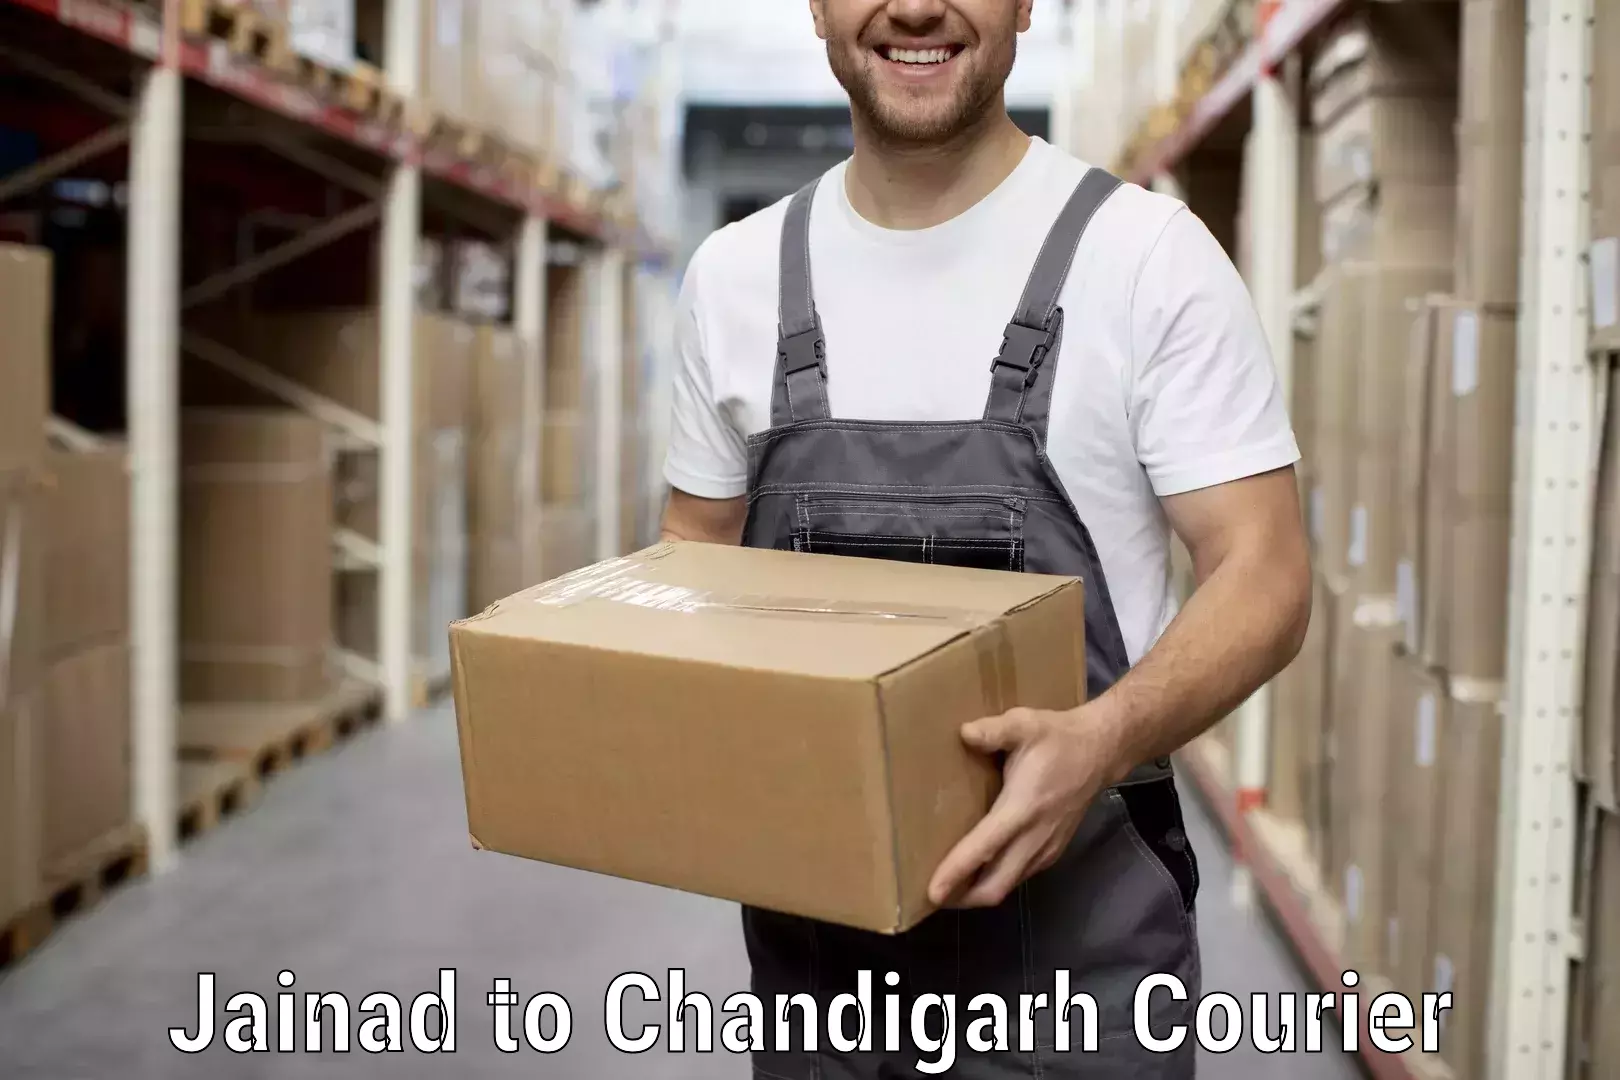 Furniture moving experts Jainad to Chandigarh